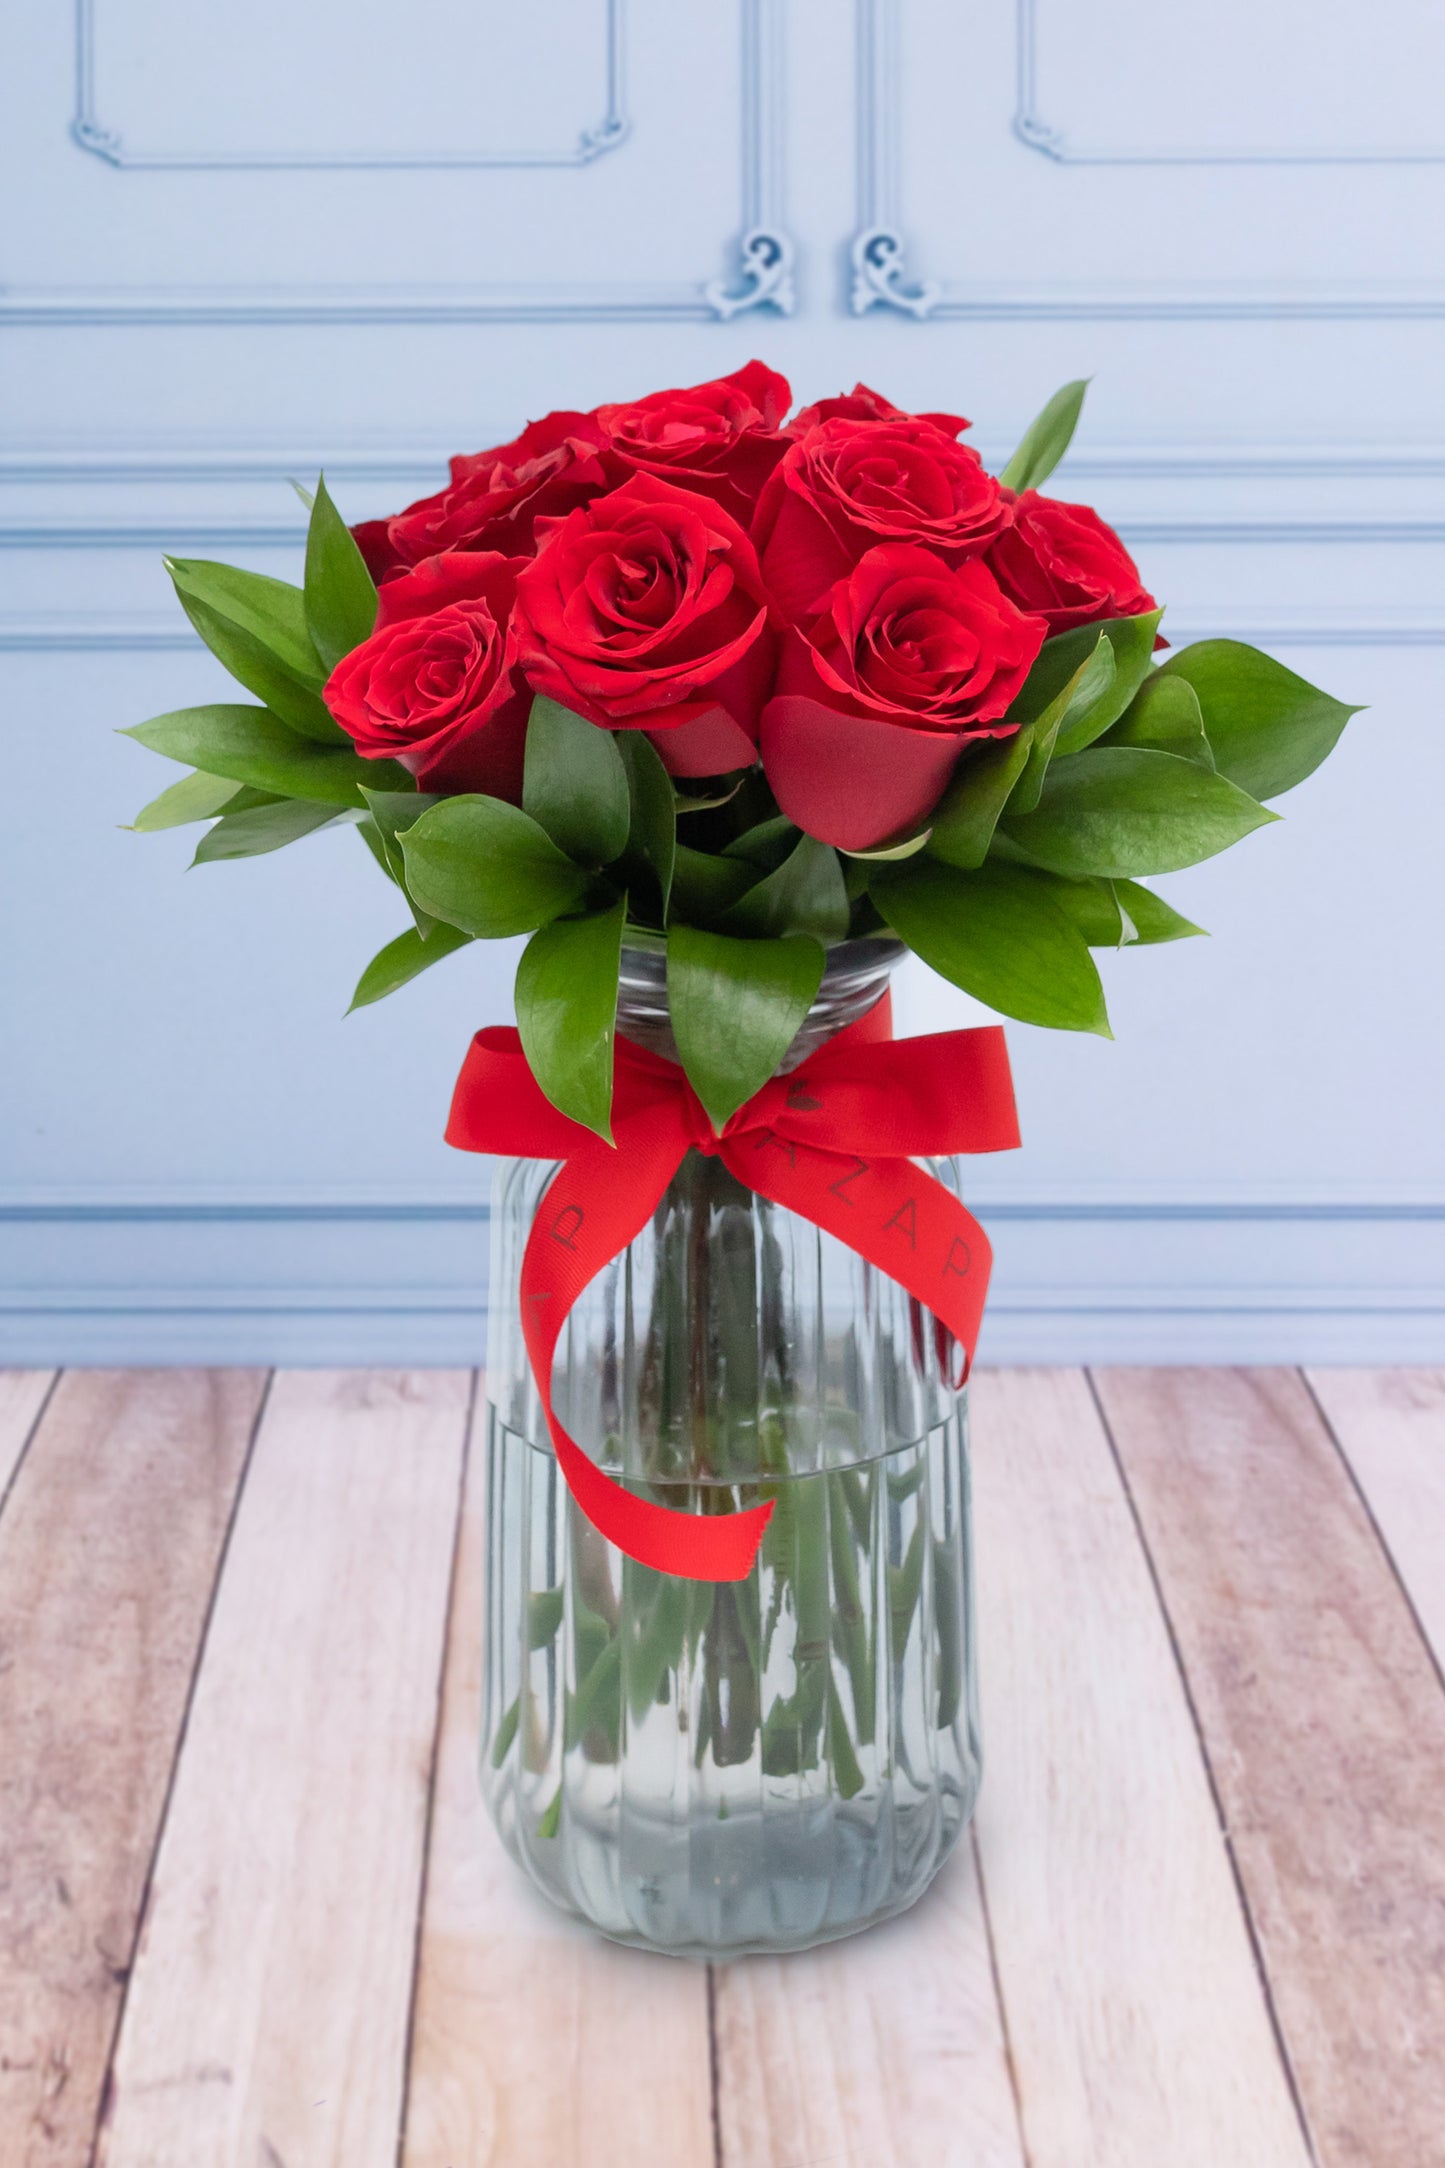 12 Rosas Rojas con Florero Rayado - Flores